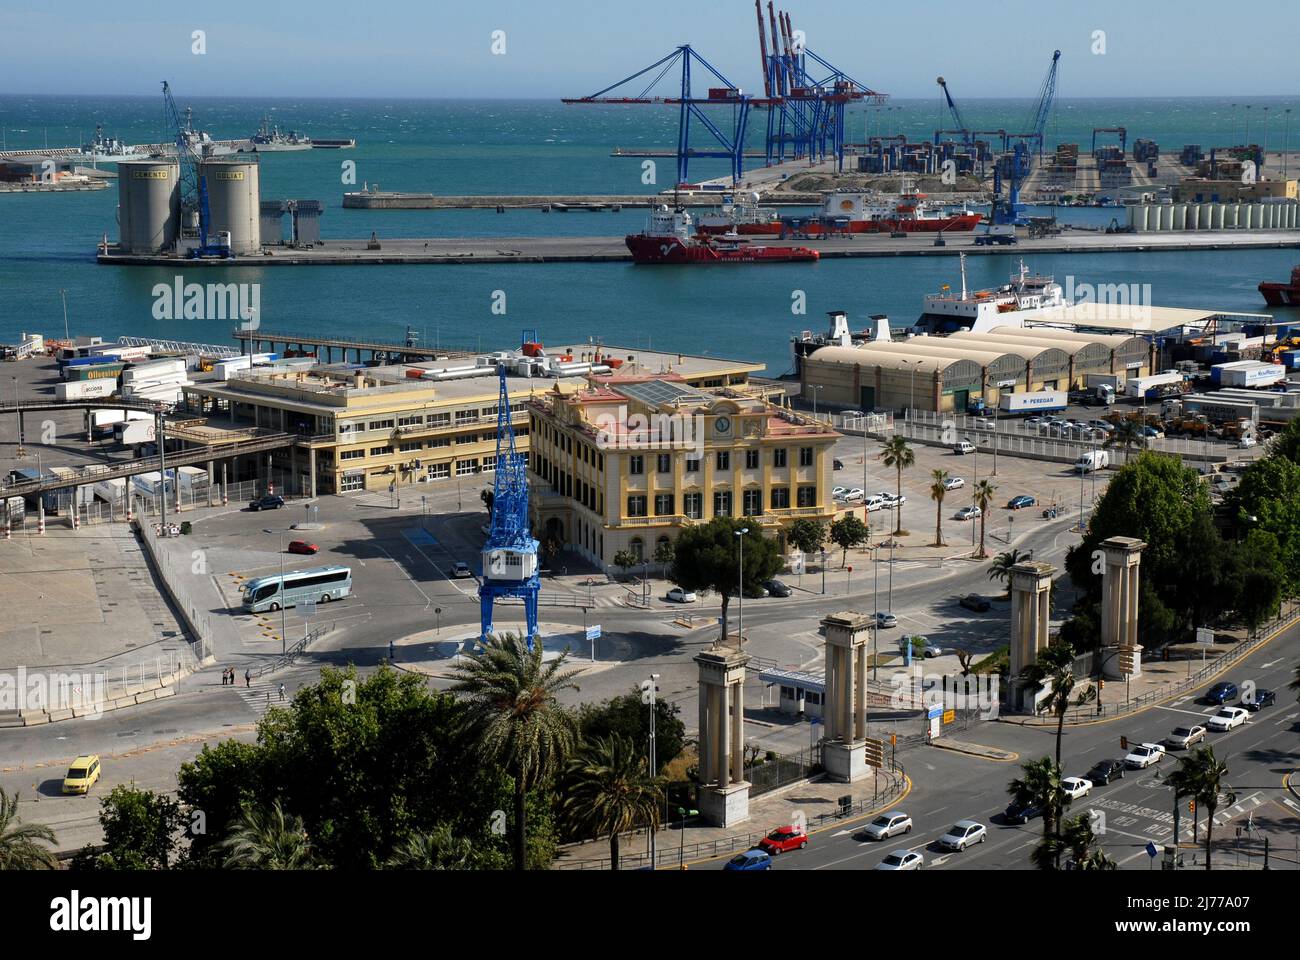 puerto mercante, Malaga foto: © Rosmi Duaso/fototext,BCN. Stockfoto